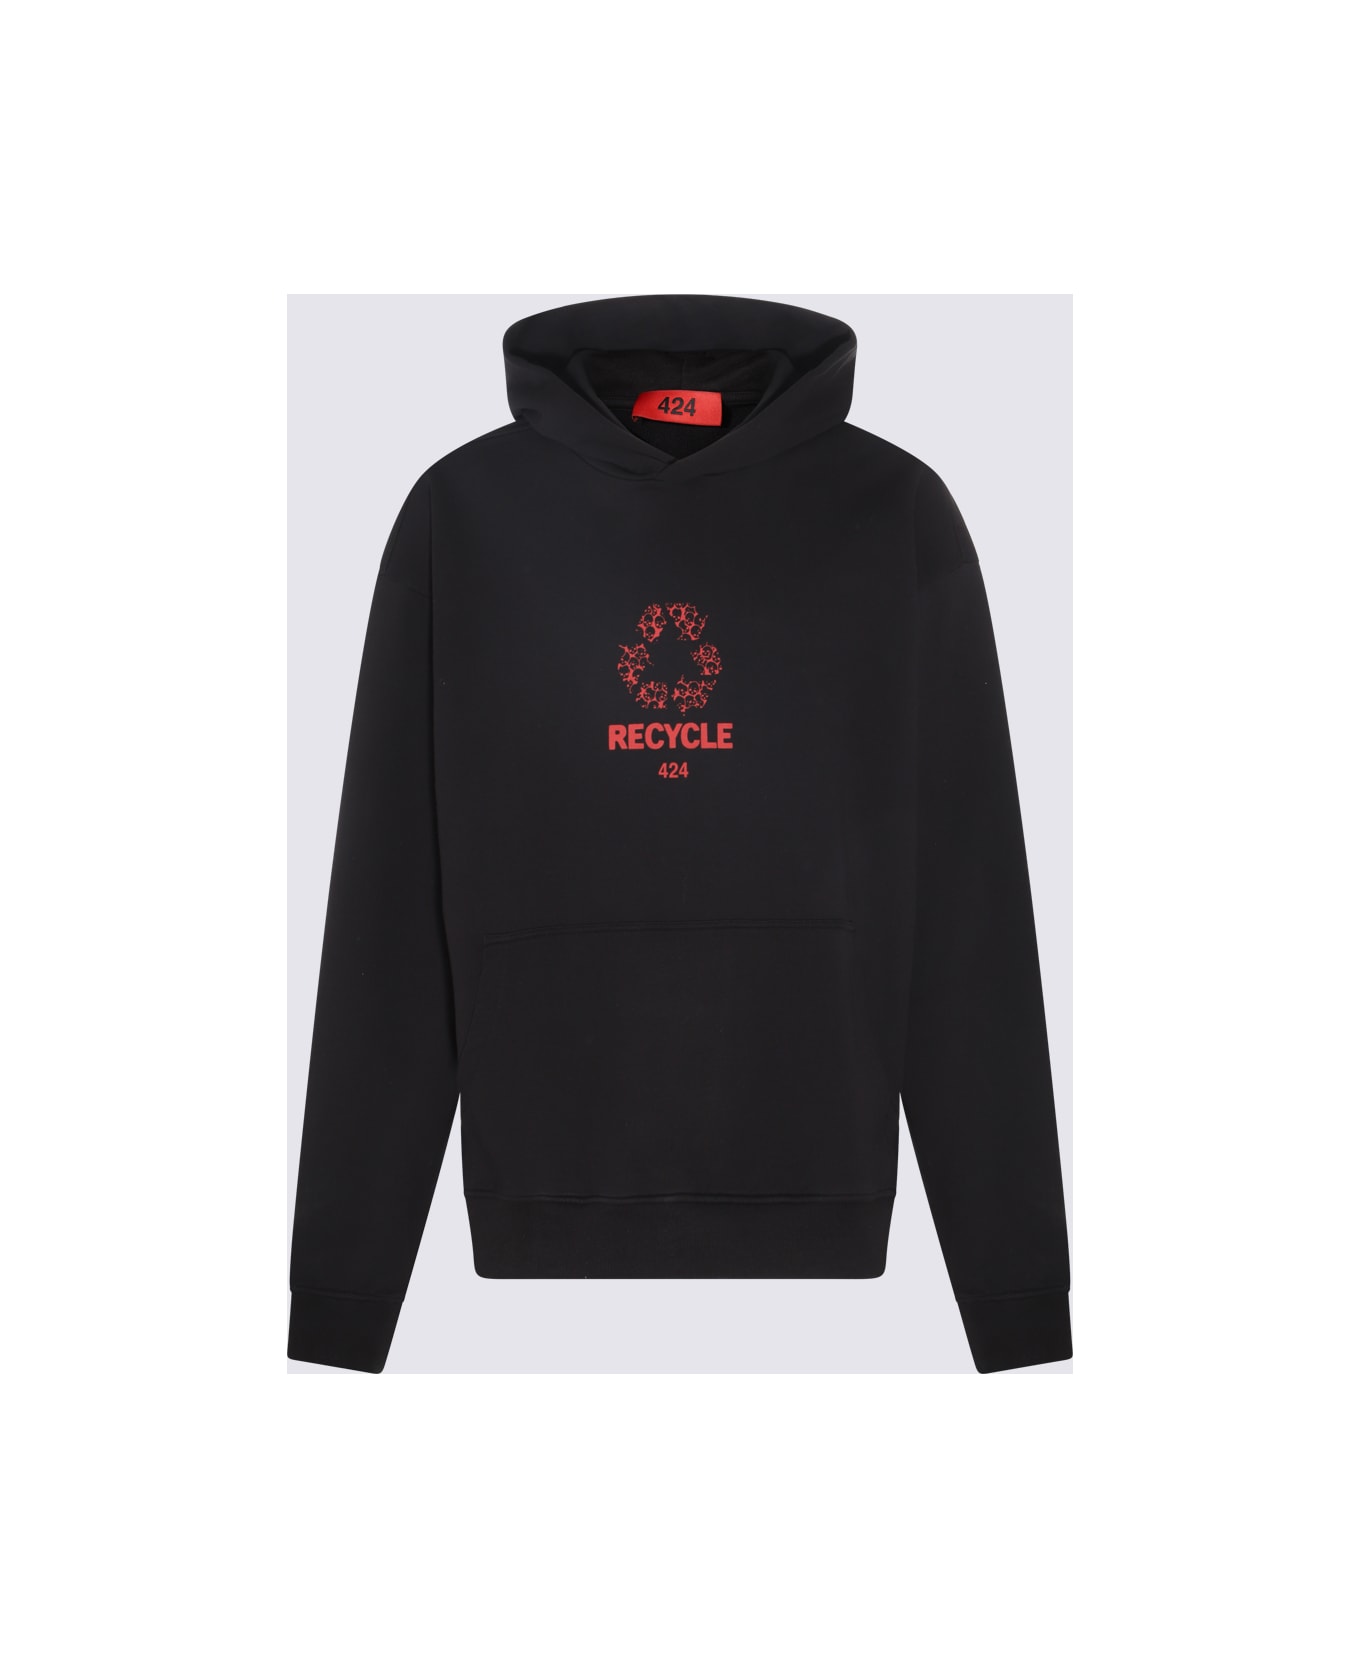 FourTwoFour on Fairfax Black And Red Cotton Blend Sweatshirt - Black フリース